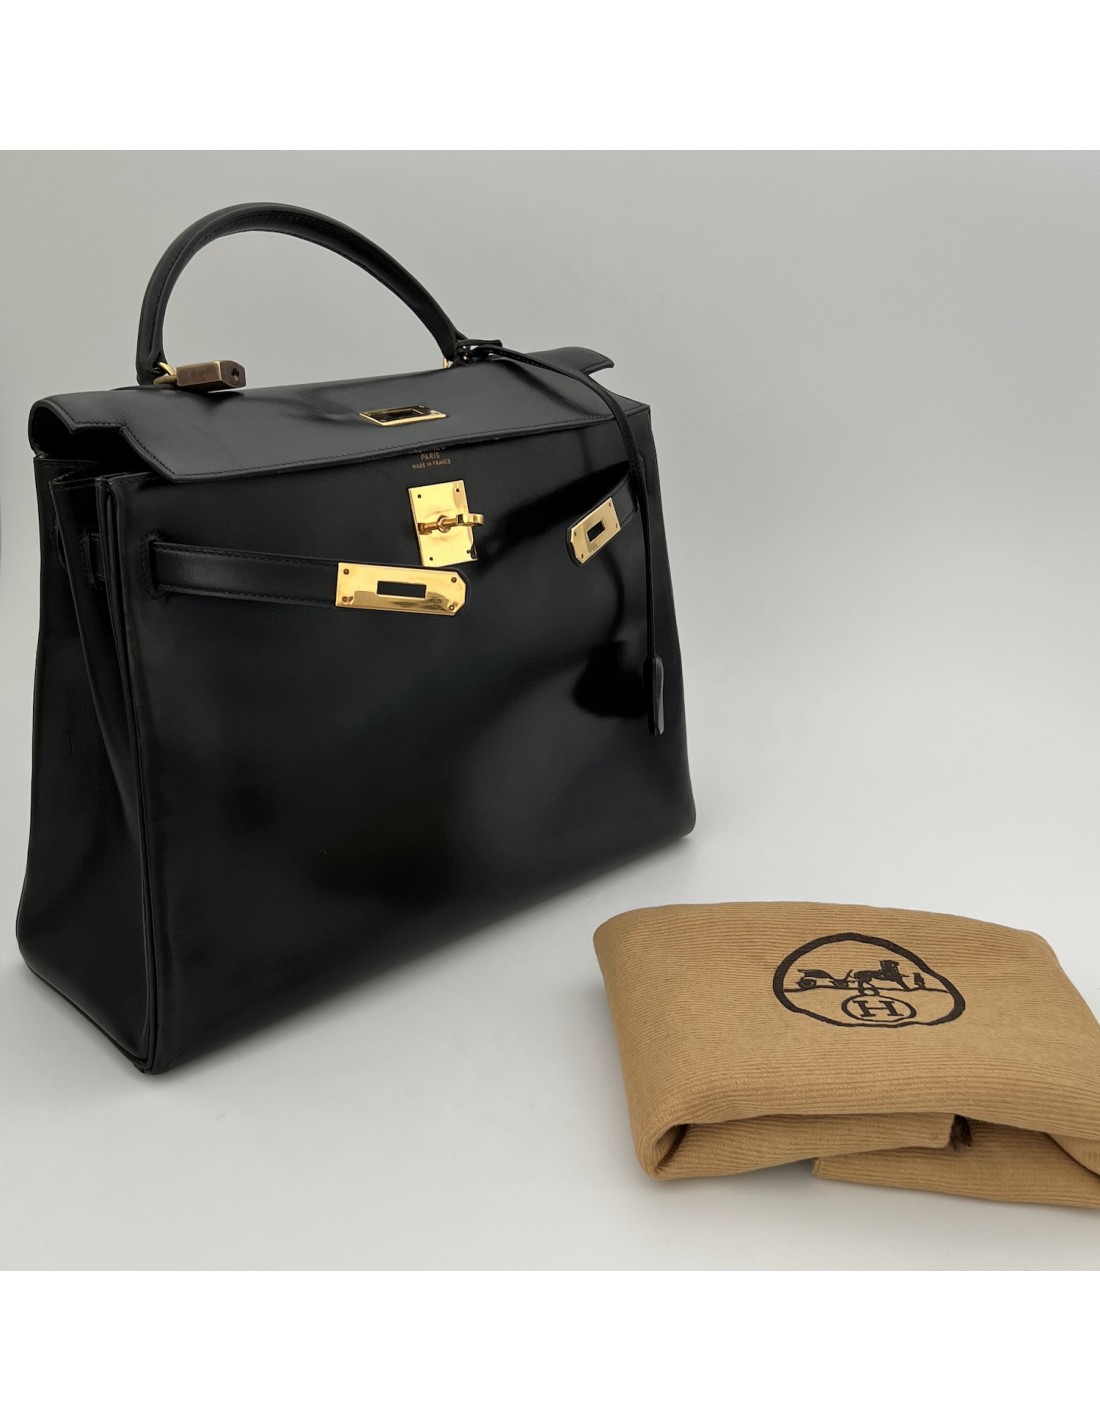 Heritage Vintage: Hermes 32cm Black Box Calf Leather Kelly Bag